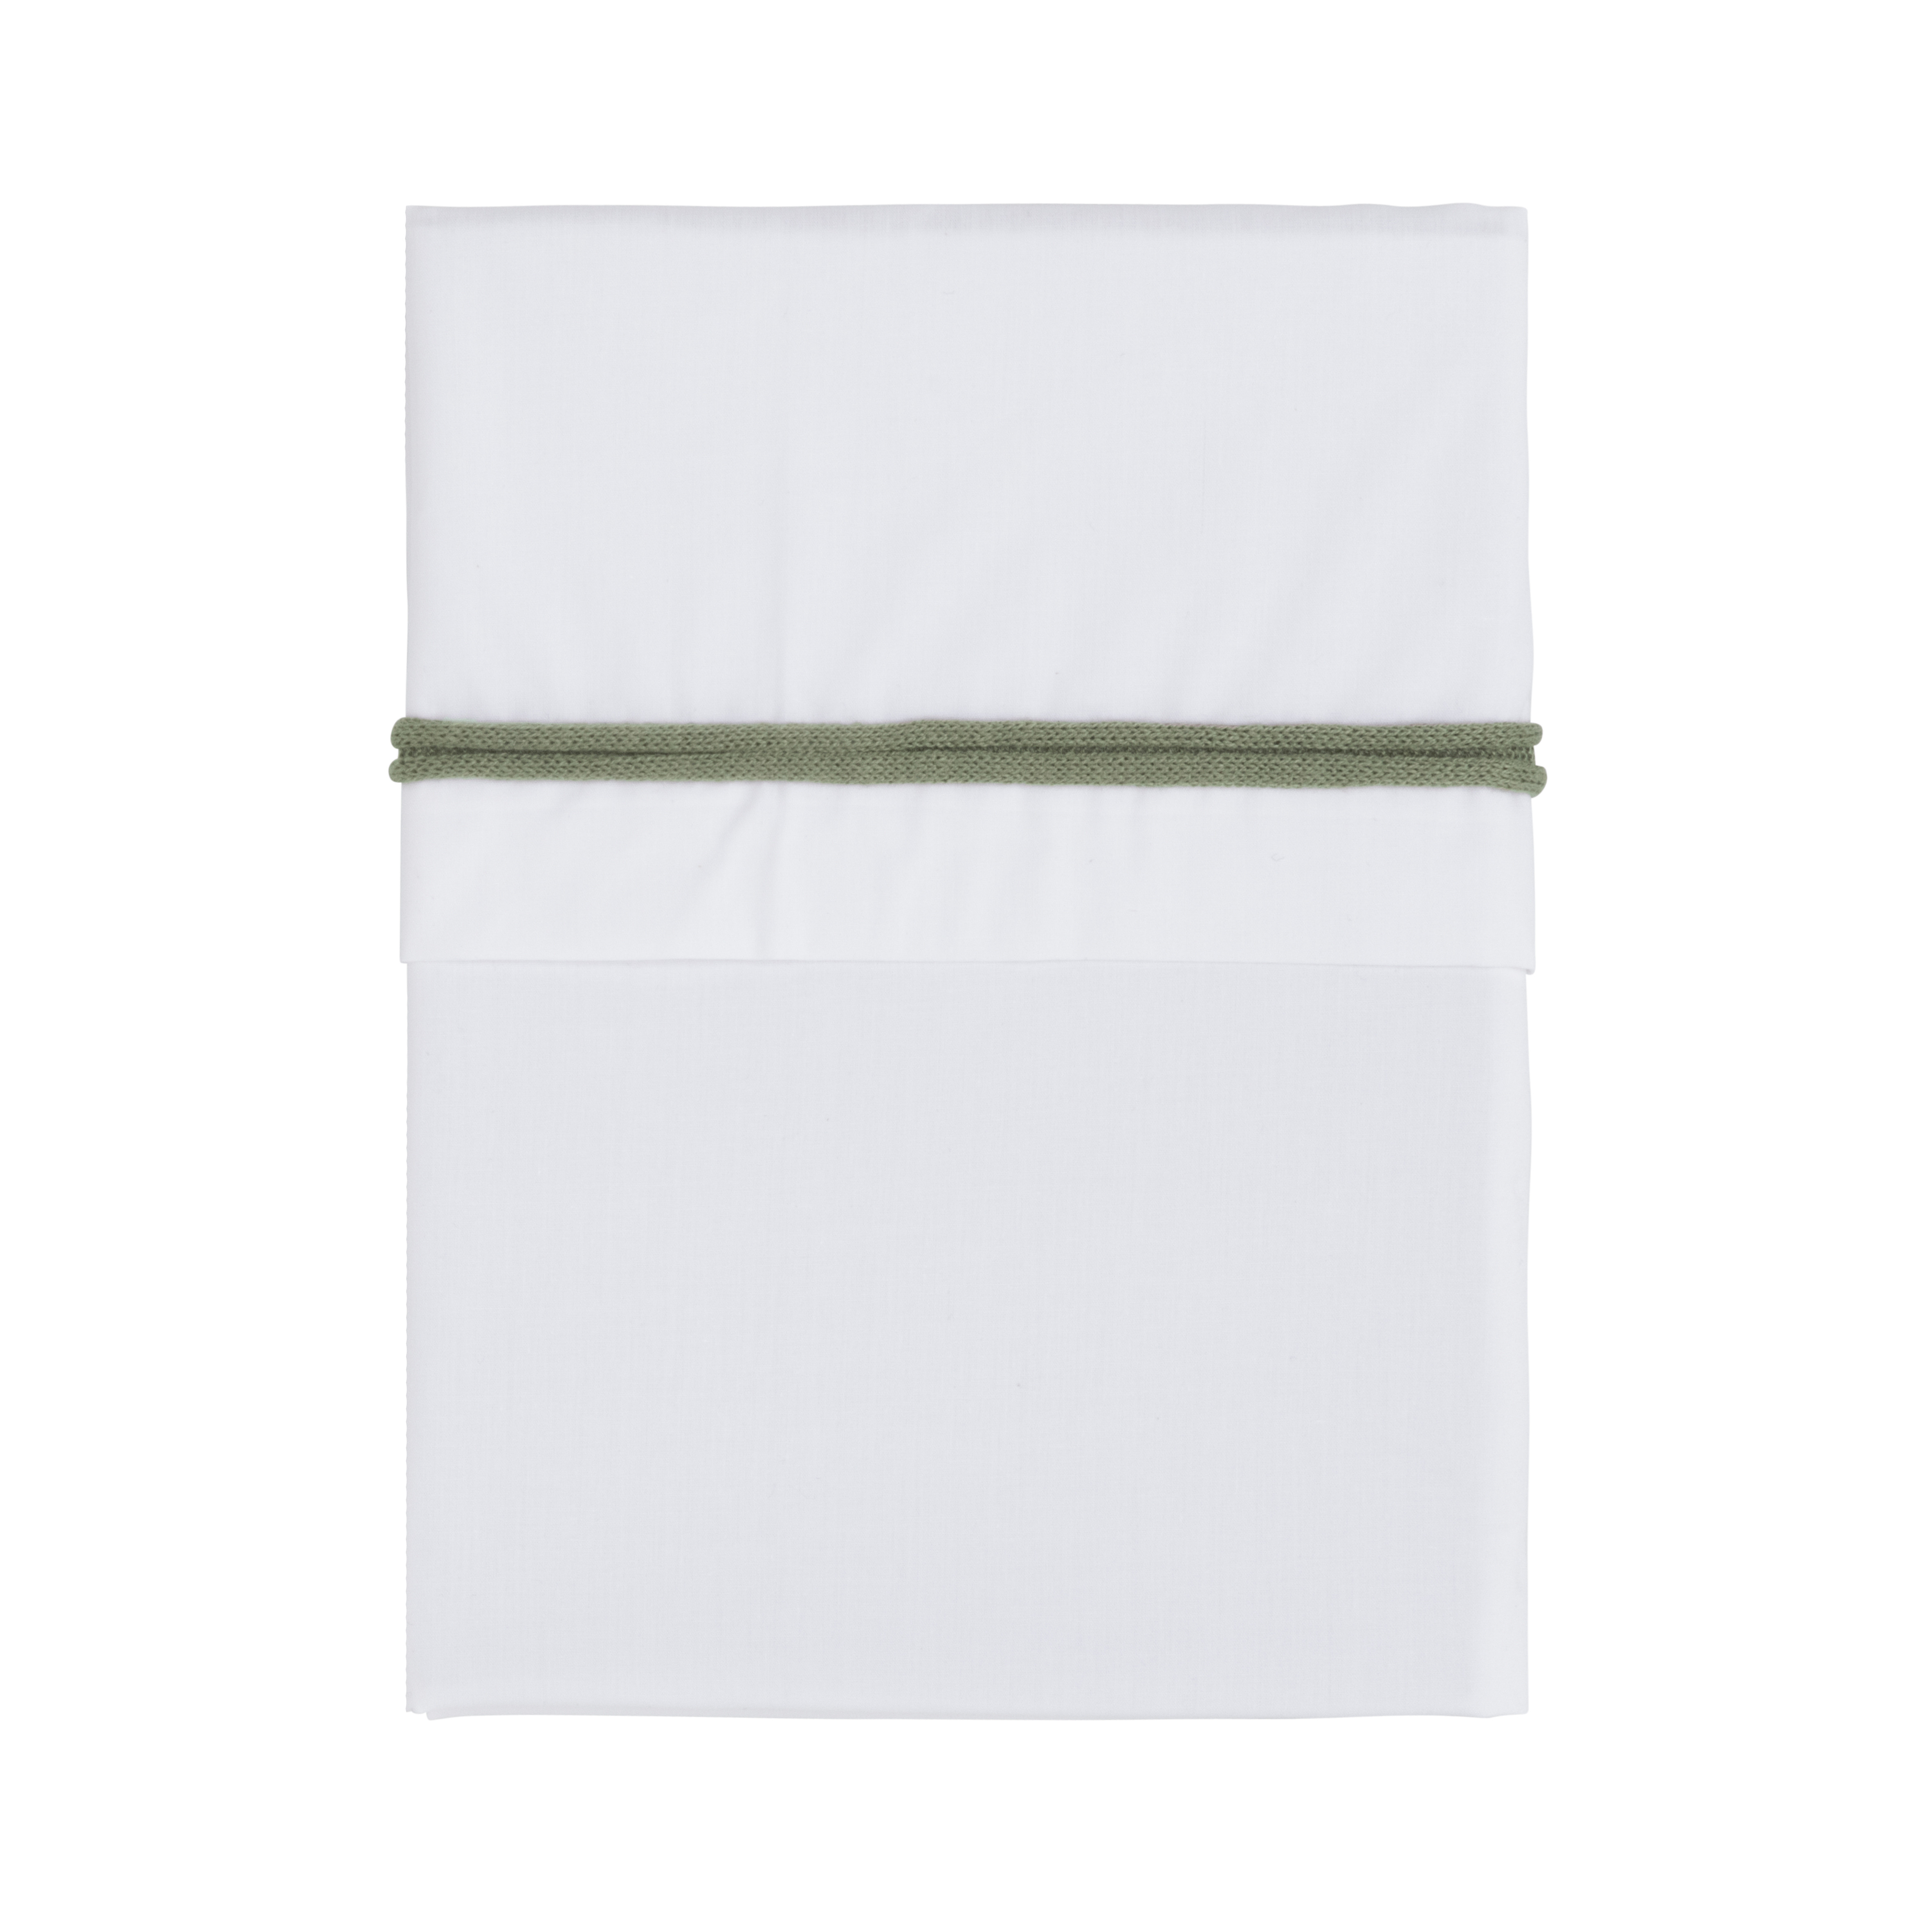 Cot sheet knitted ribbon urban green/white